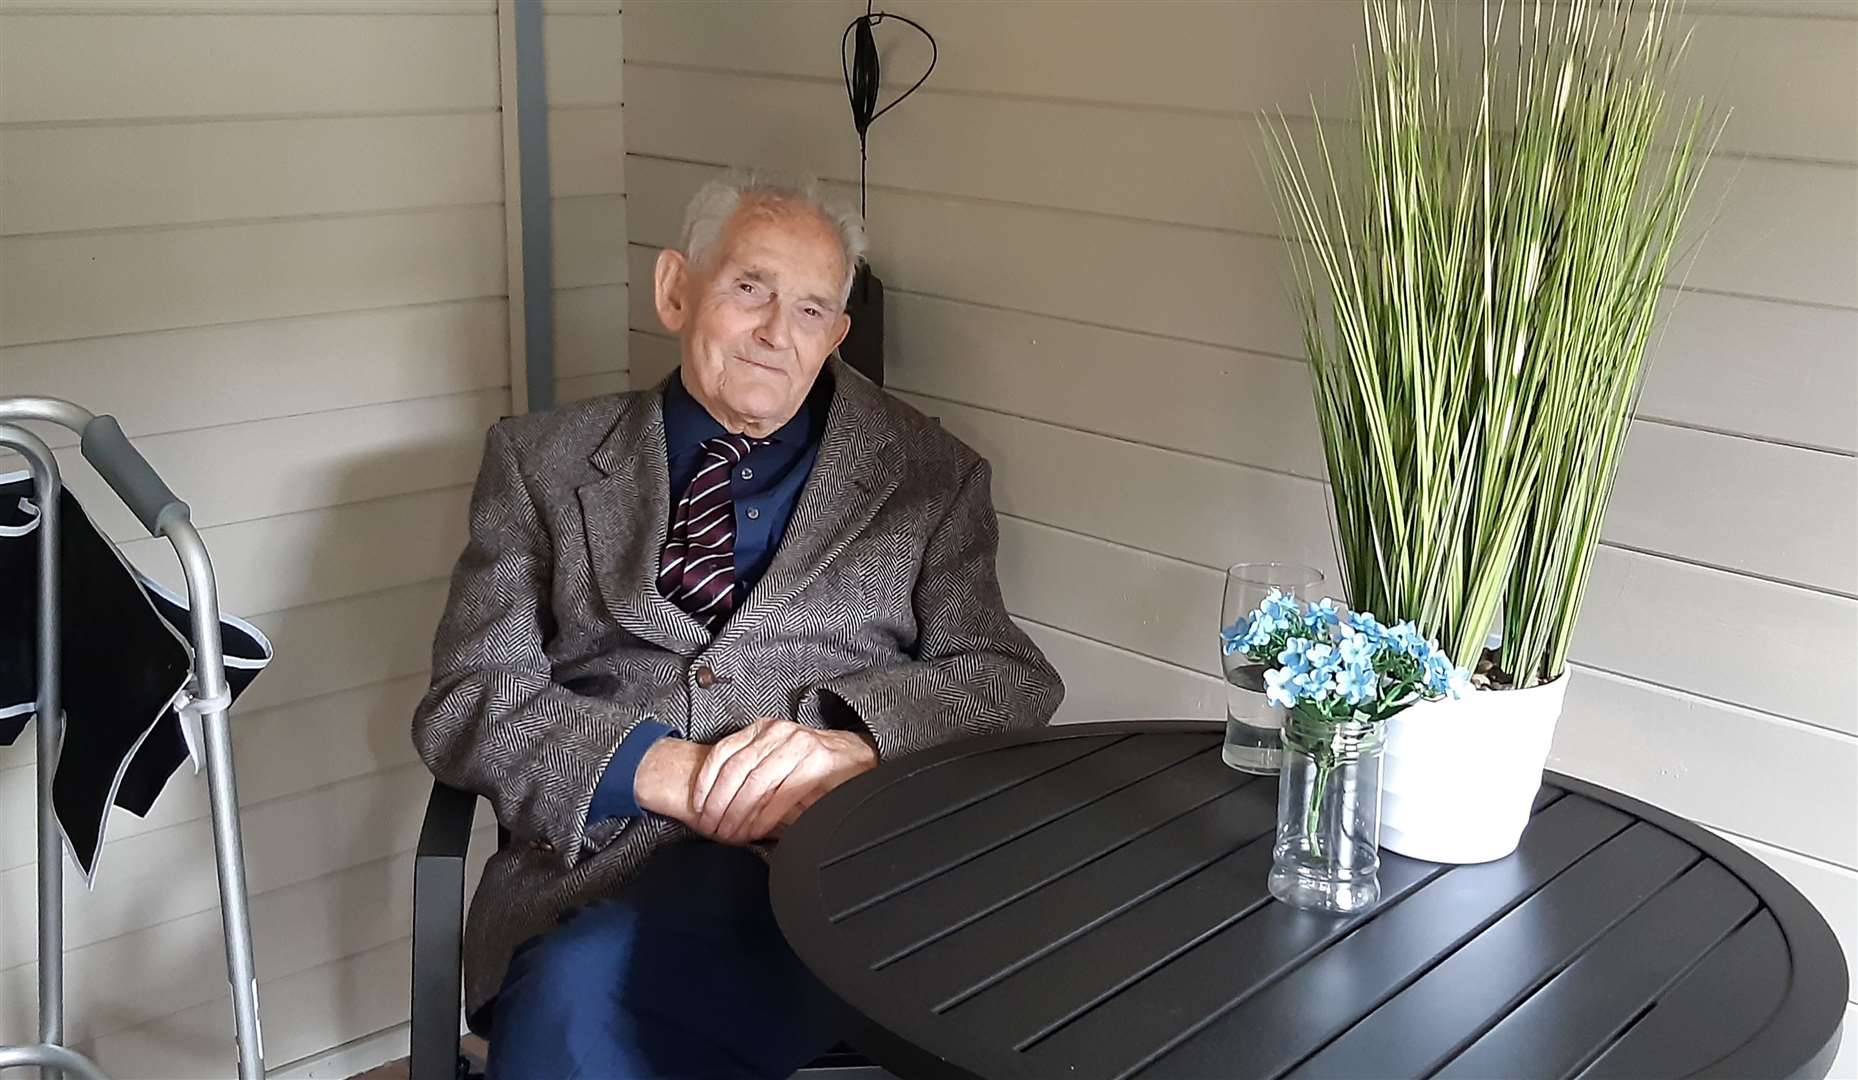 Desmond Liddicoat, a former prison officer at Blantyre House, now aged 91